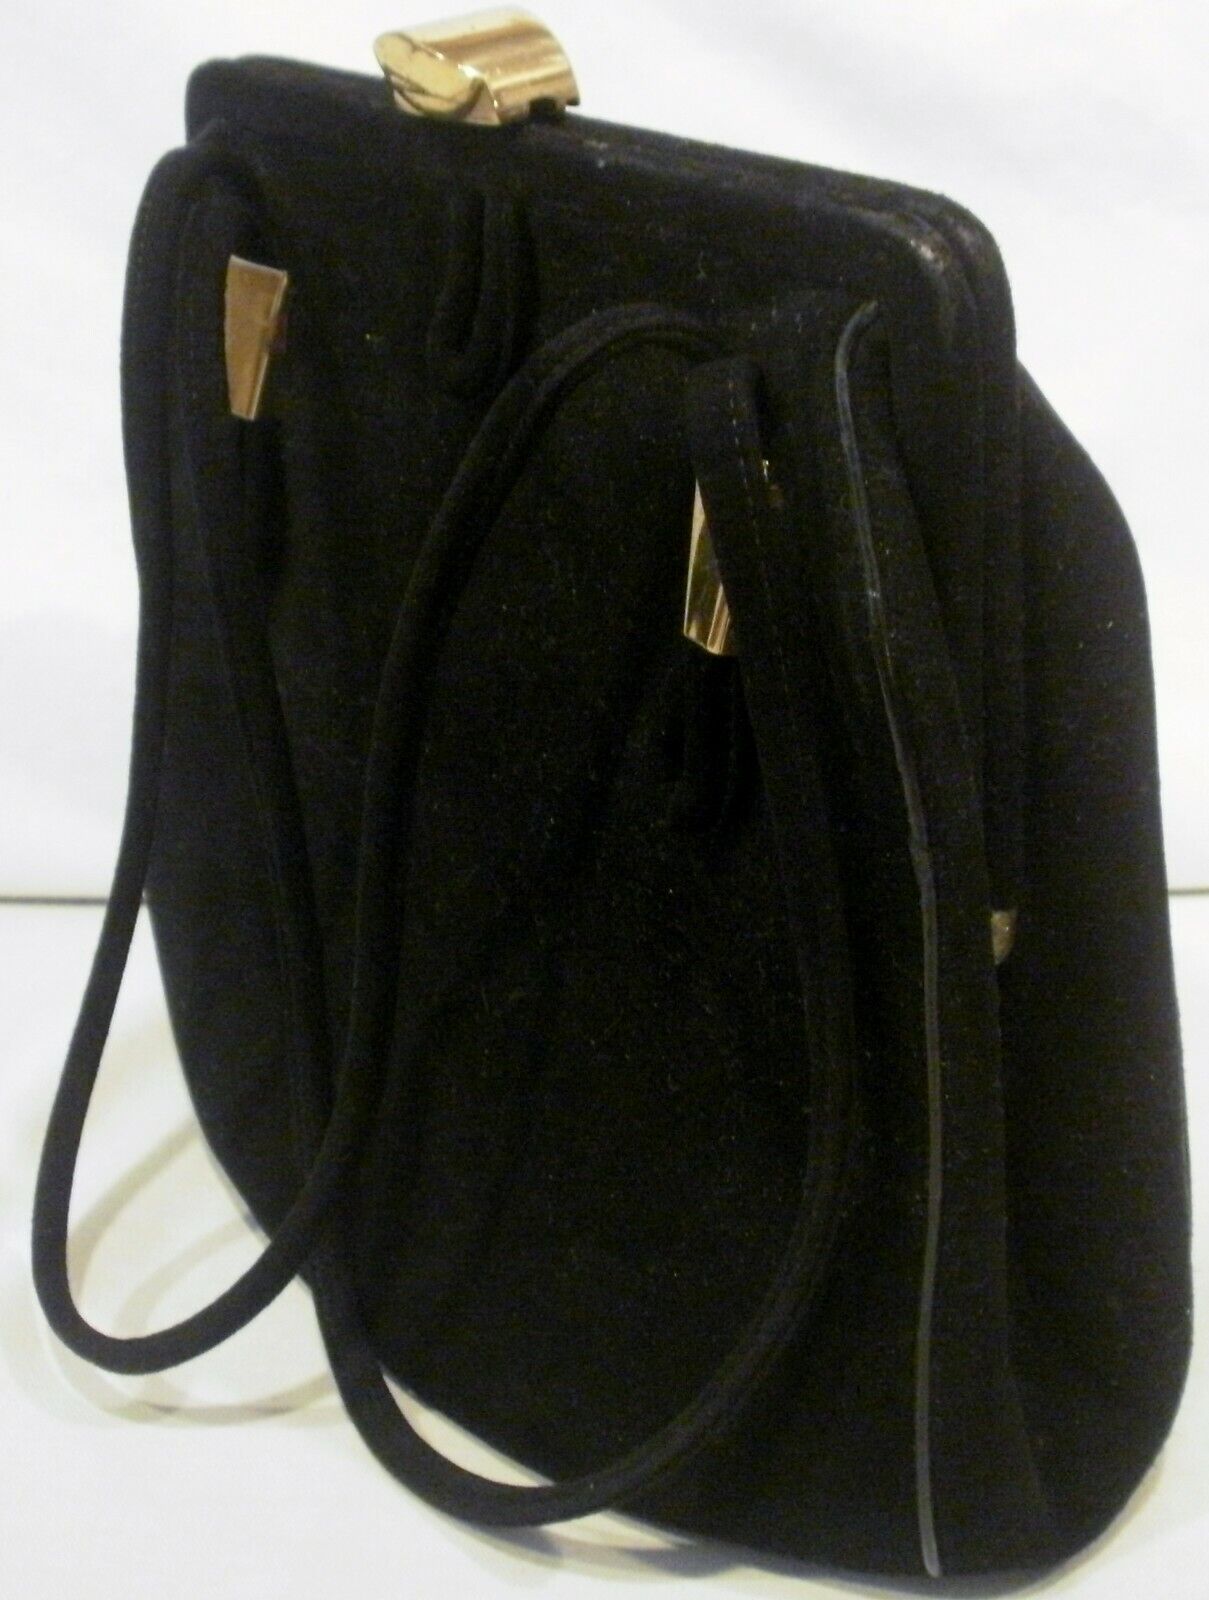 Tracy Small Shoulder Bag | Order online now | Decadent Copenhagen